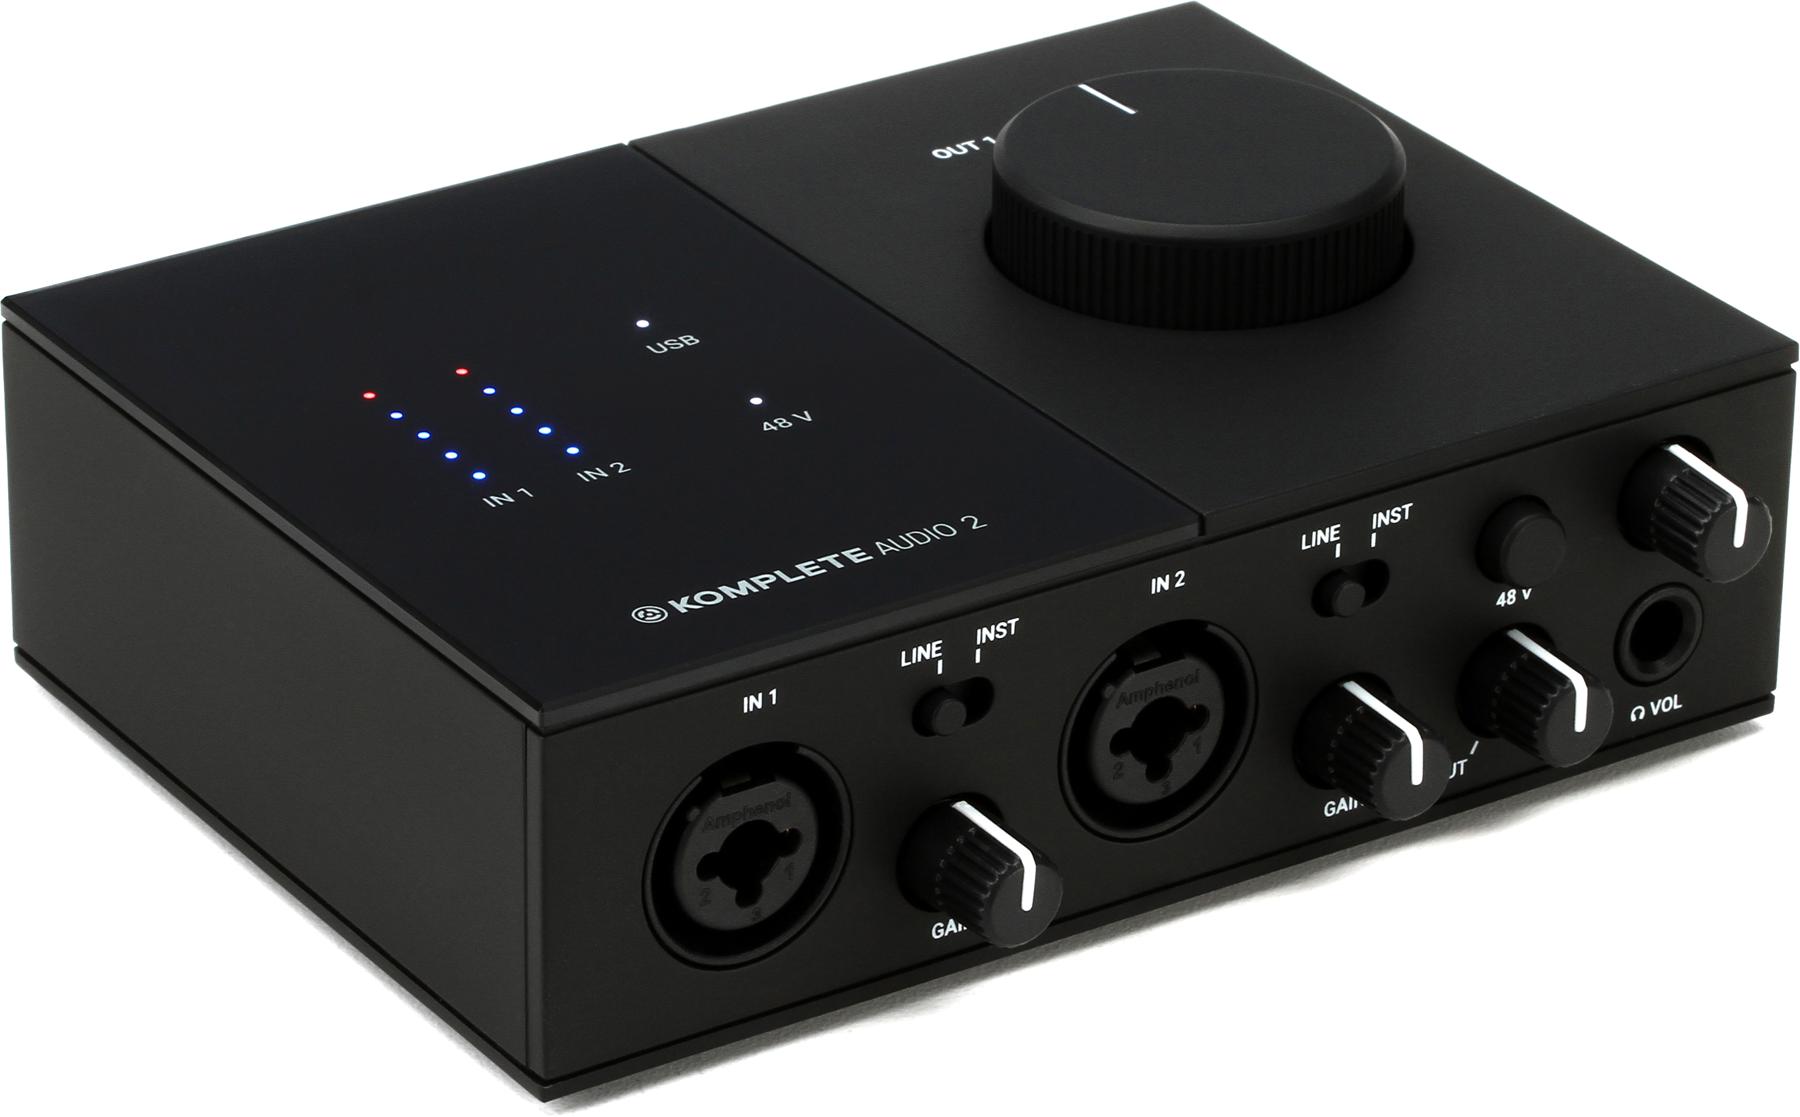 Native Instruments Komplete Audio 2 USB Audio Interface